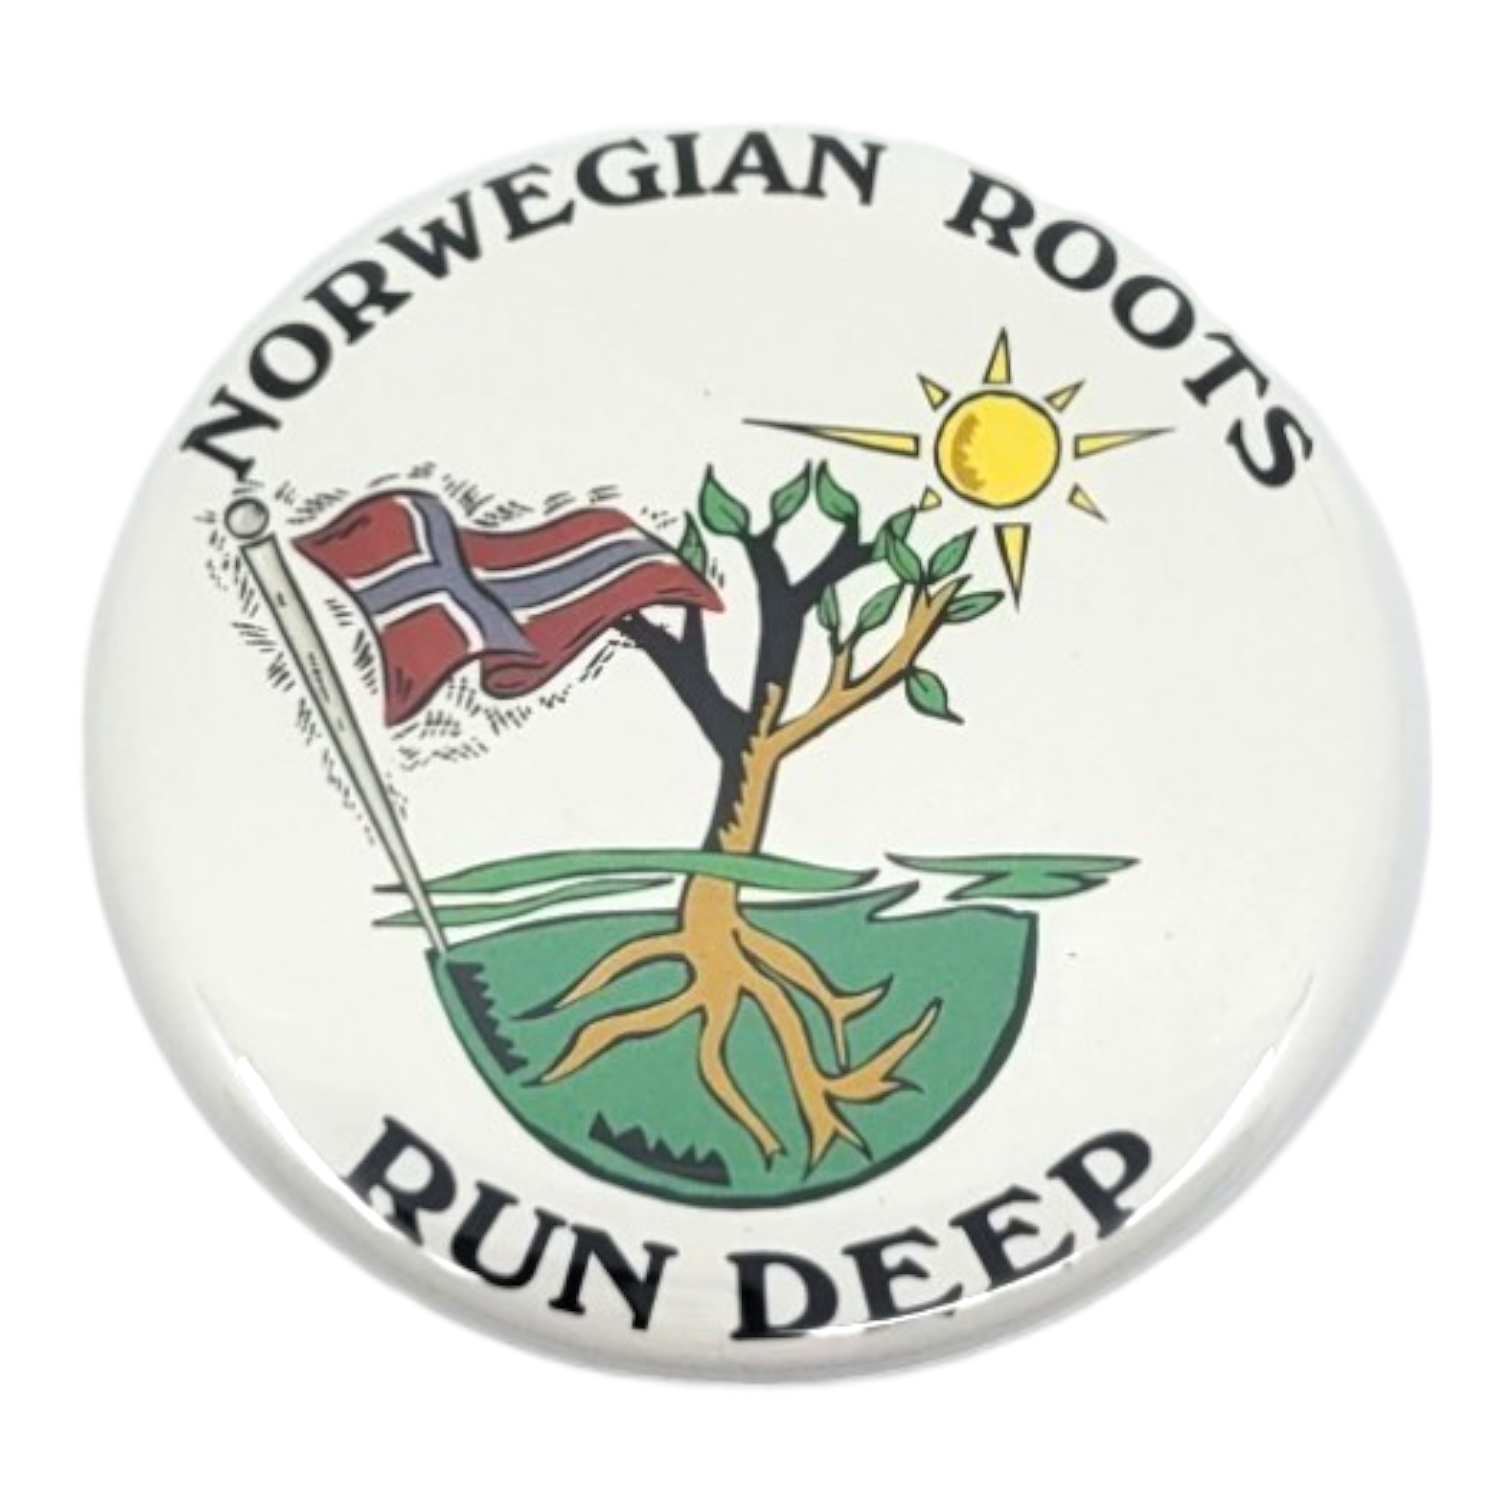 Magnet: "Norwegian Roots Run Deep", 2.25" Round Magnet